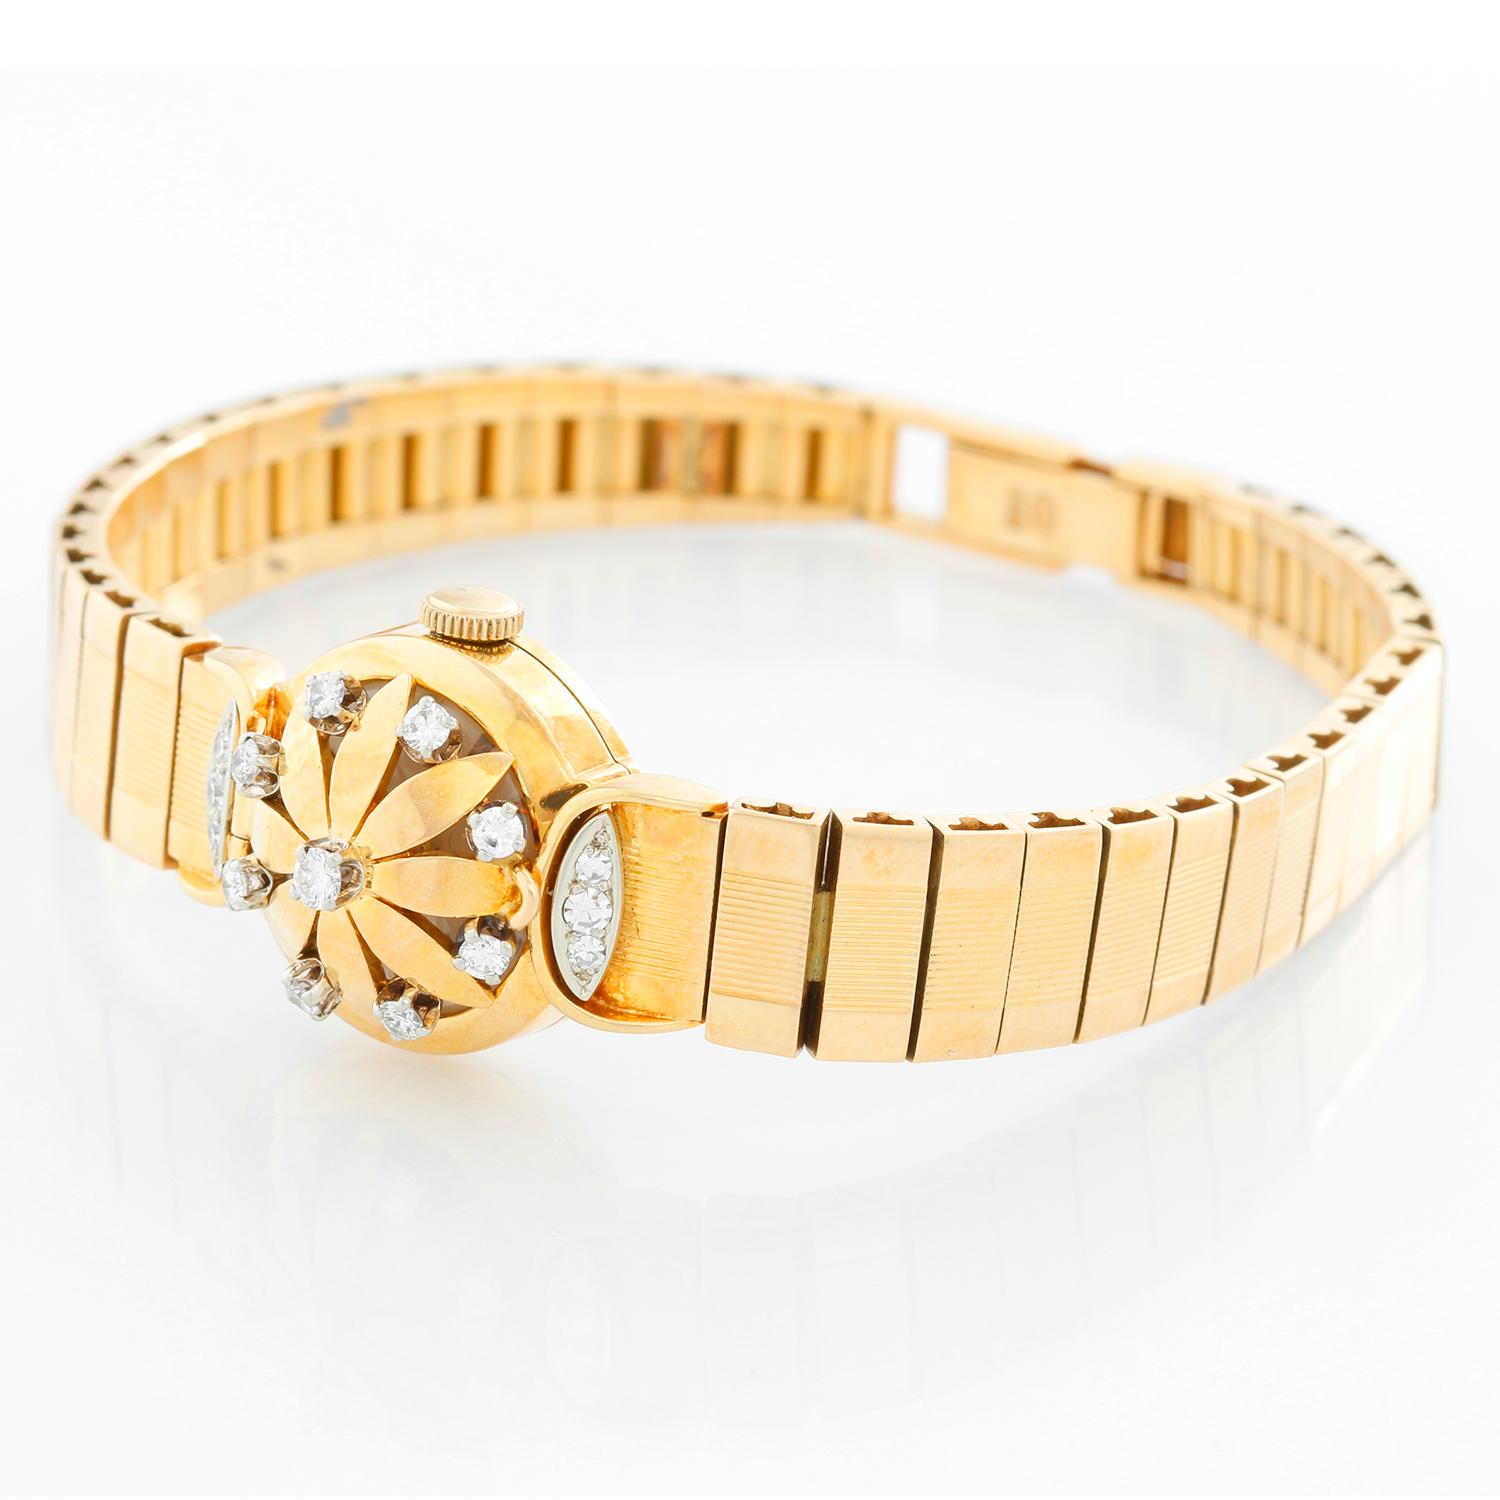 Round Cut Gubelin Ladies Yellow Gold and Diamond Bracelet Watch